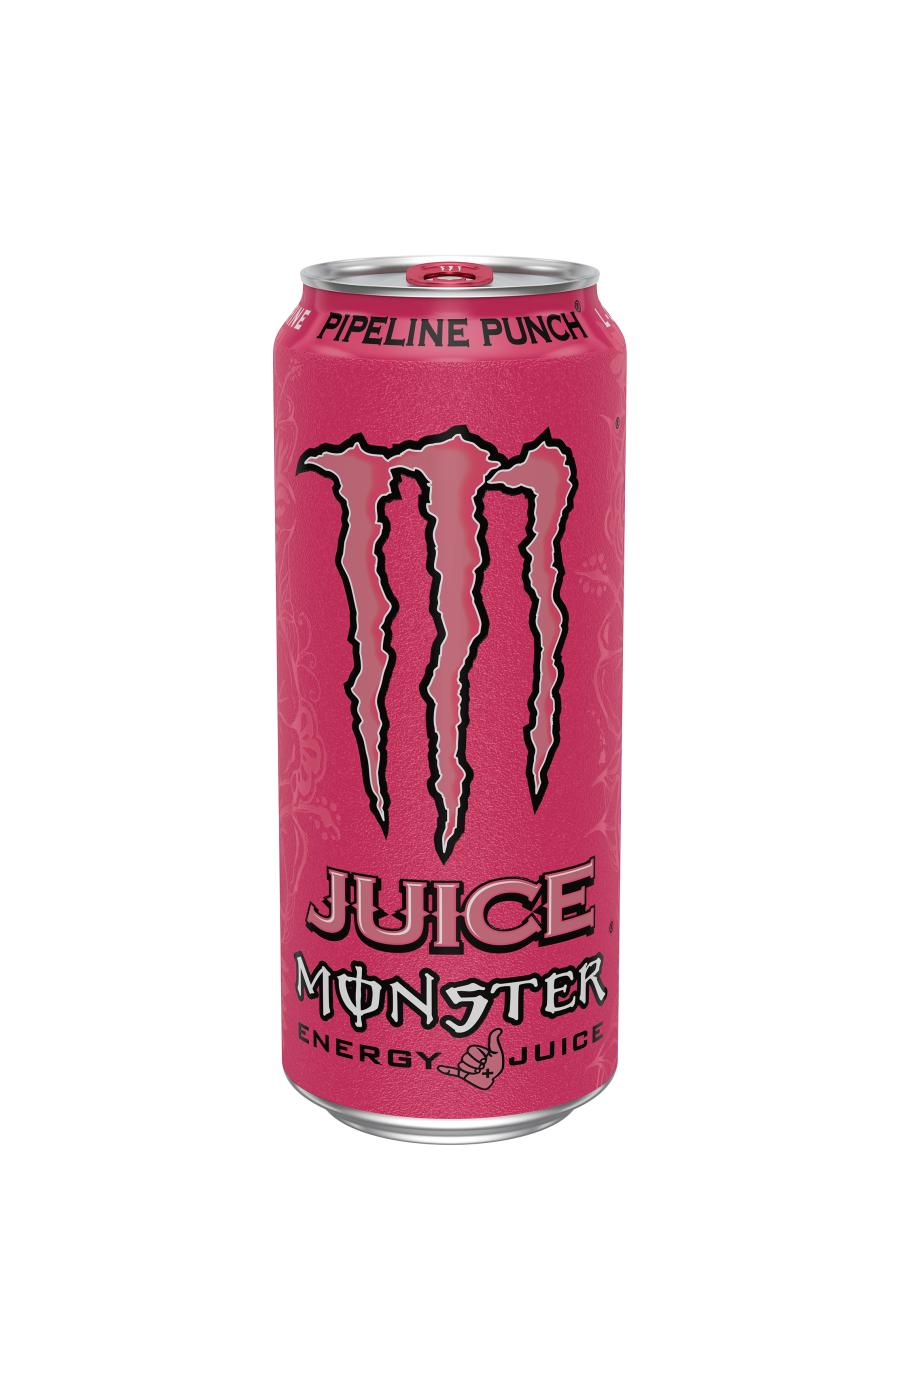 Monster Energy Juice Monster Pipeline Punch, Energy + Juice; image 1 of 2